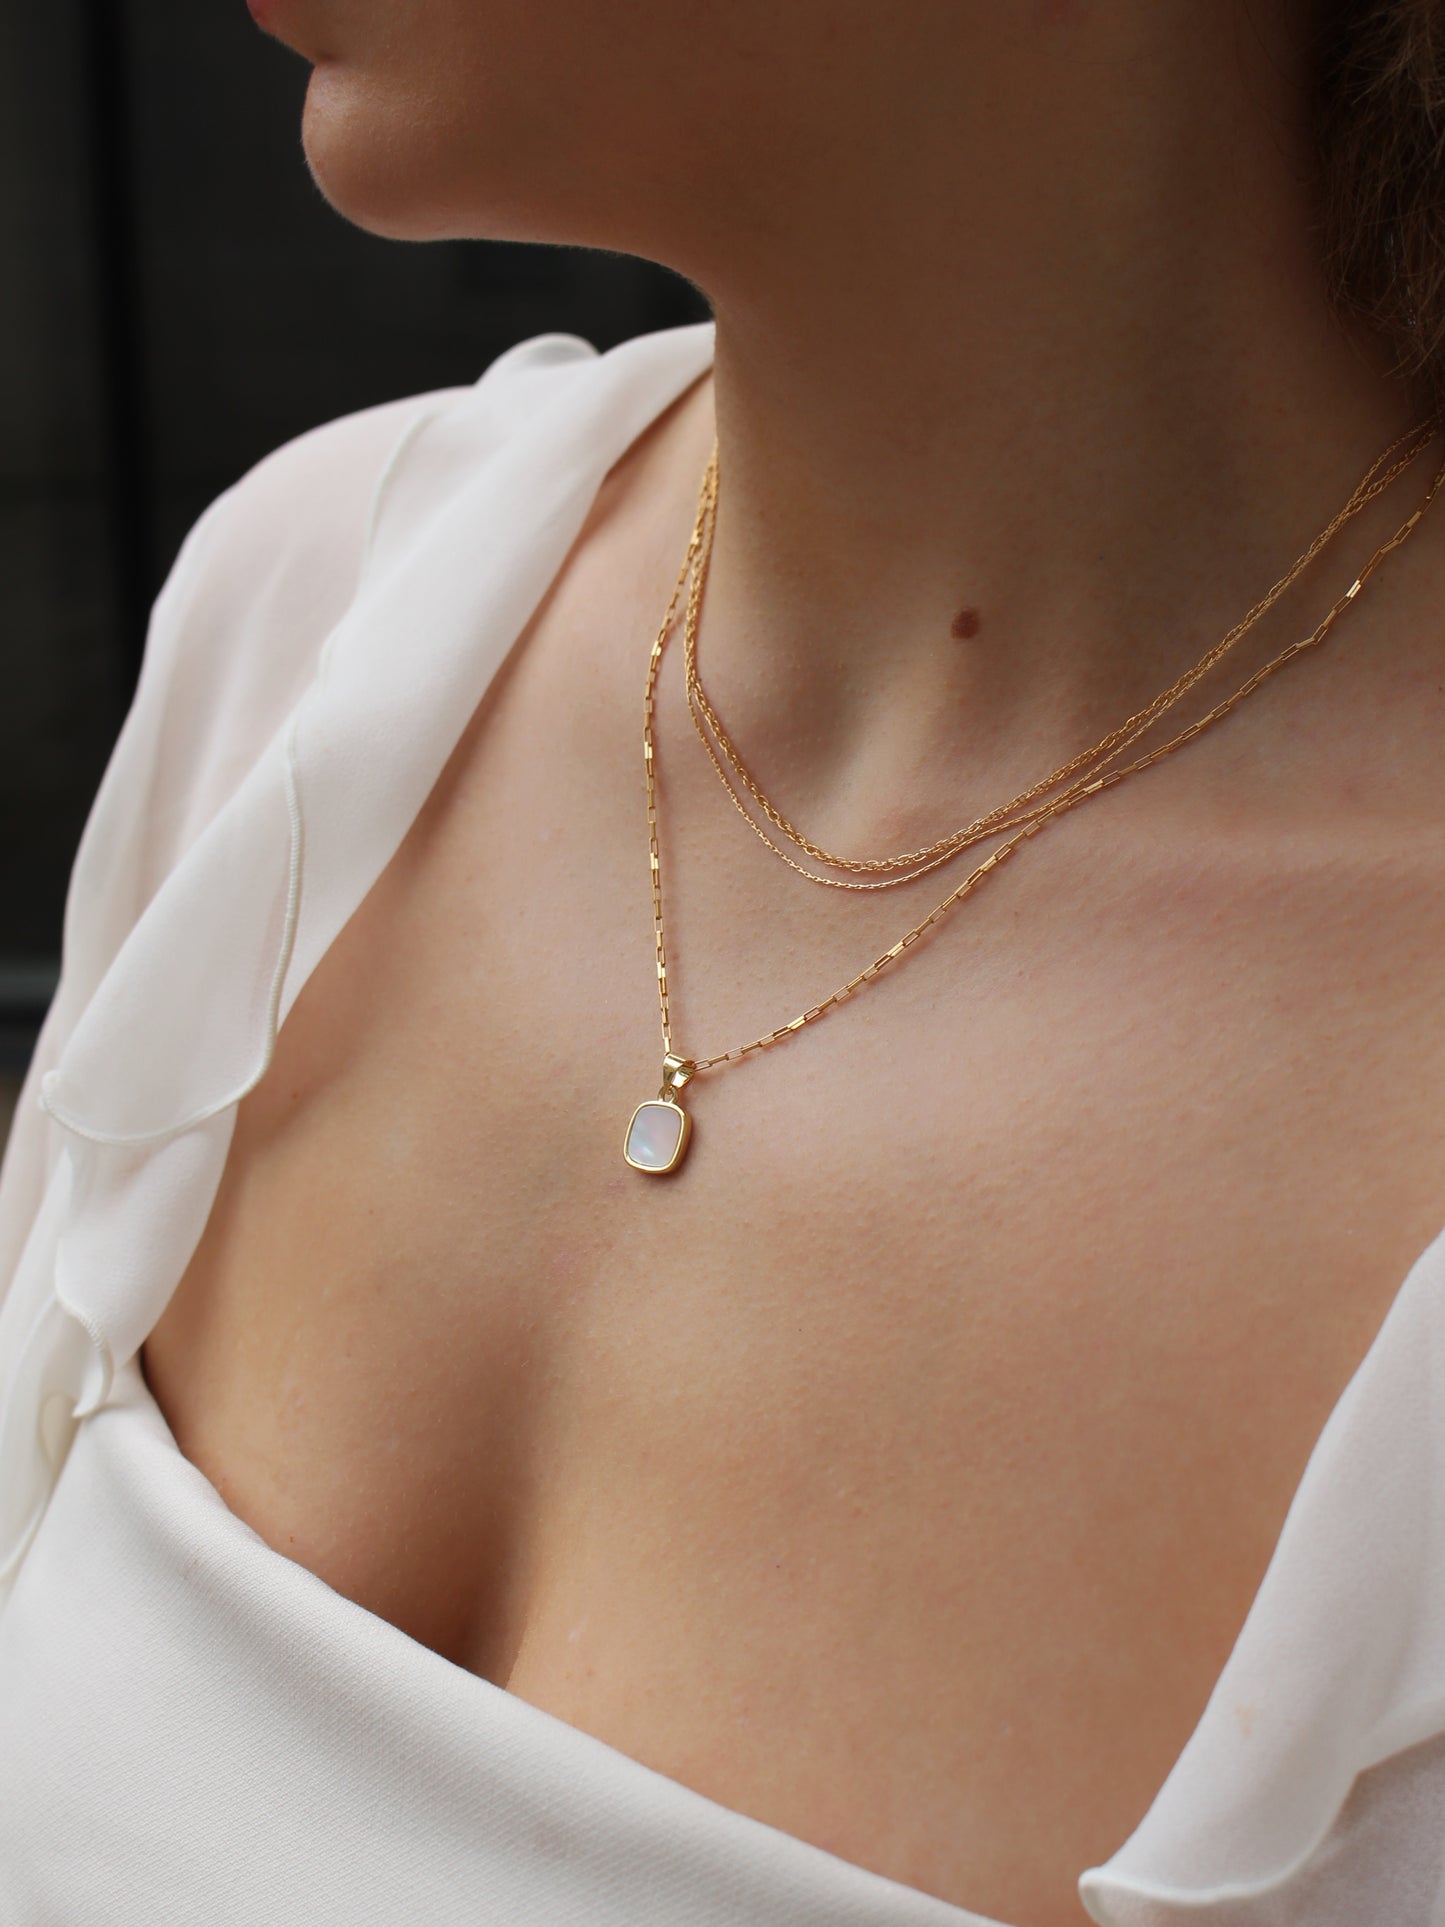 Chiara pearl Lara necklace